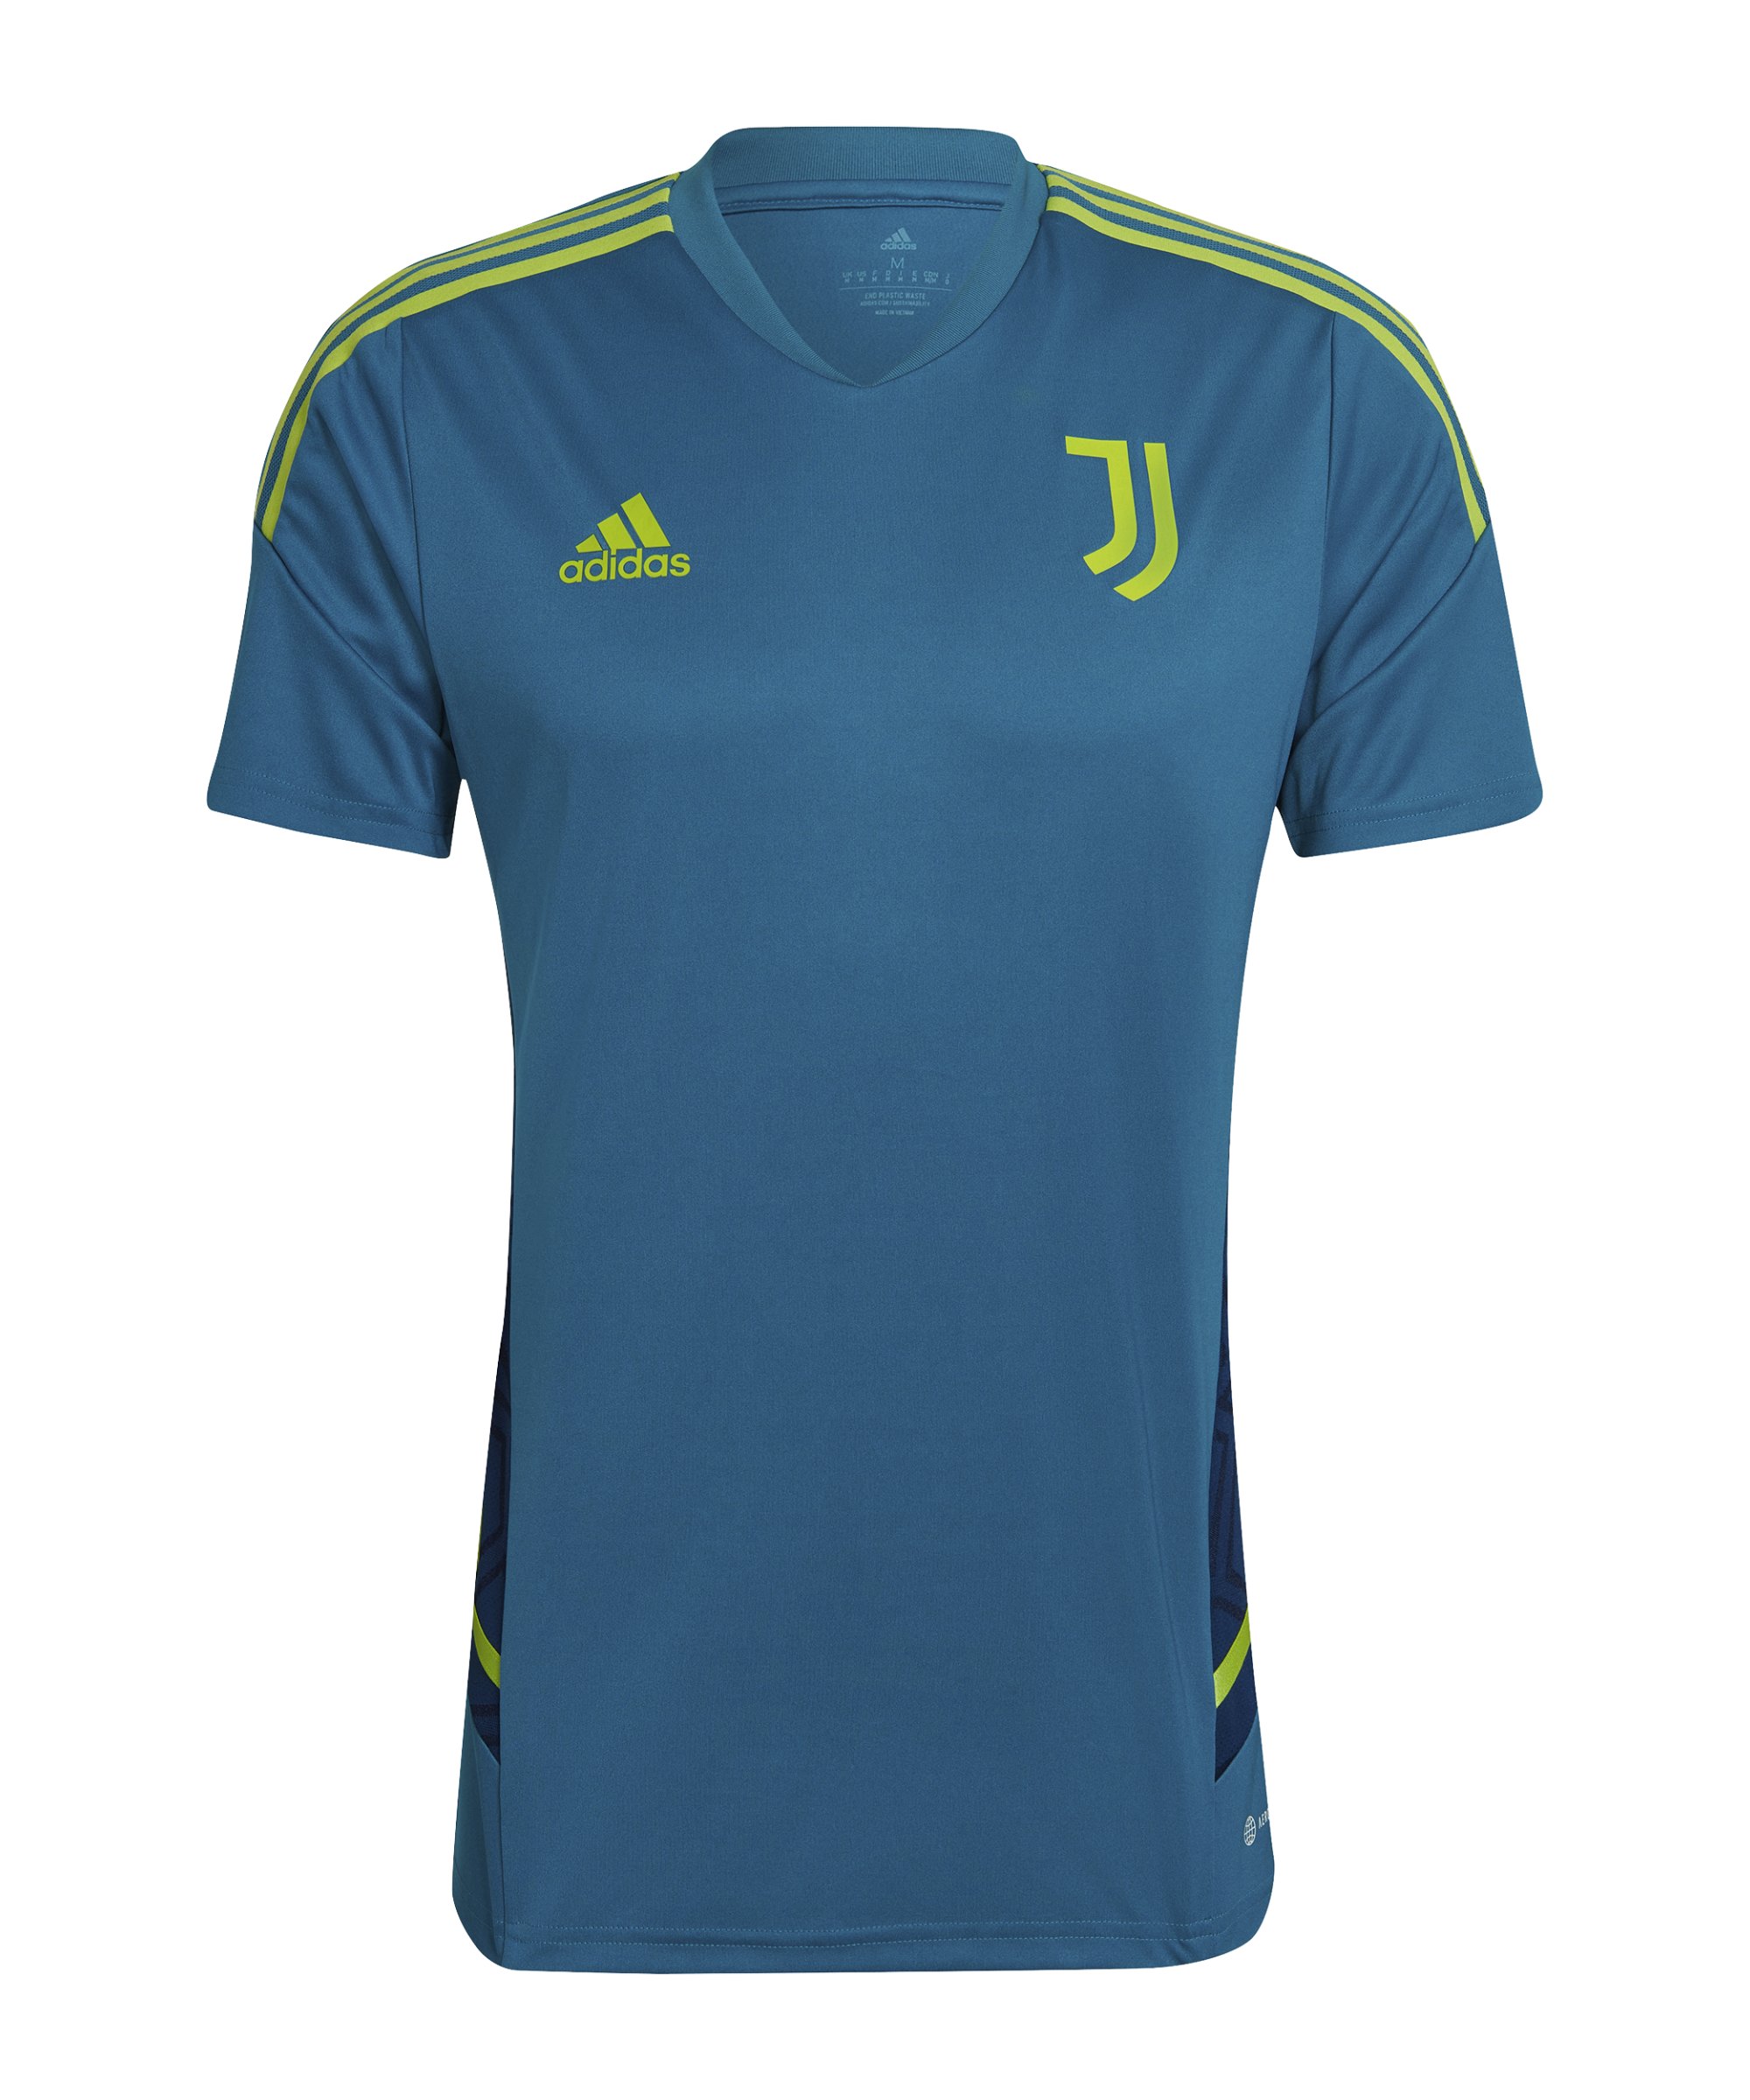 adidas Juventus Turin Trainingsshirt Blau - blau